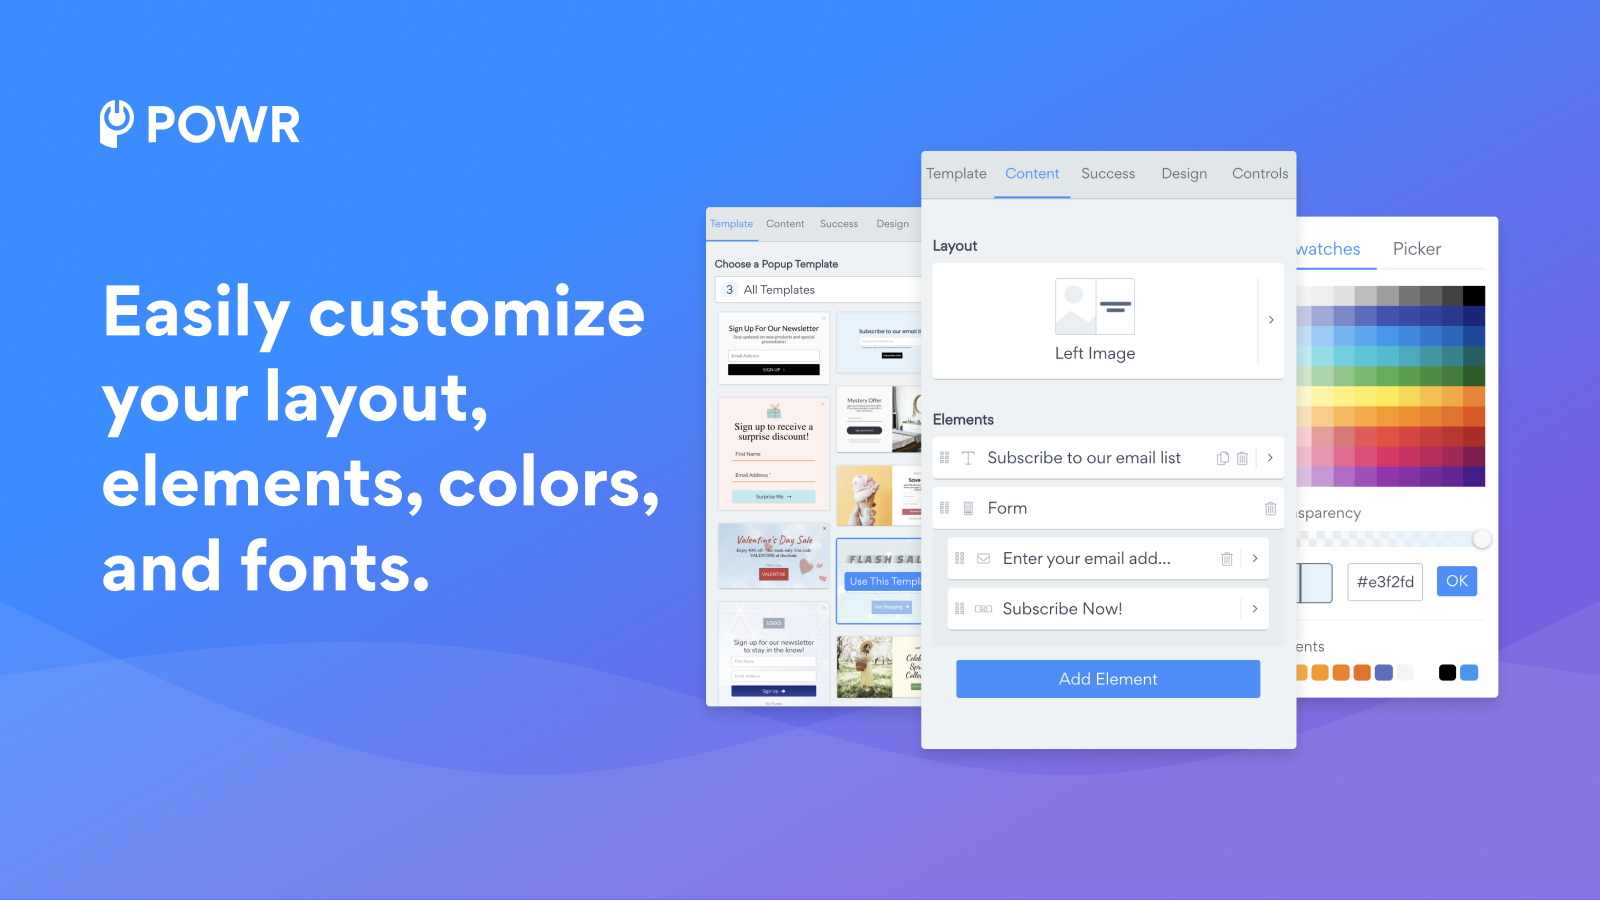 Personalize facilmente seu layout, elementos, cores e fontes